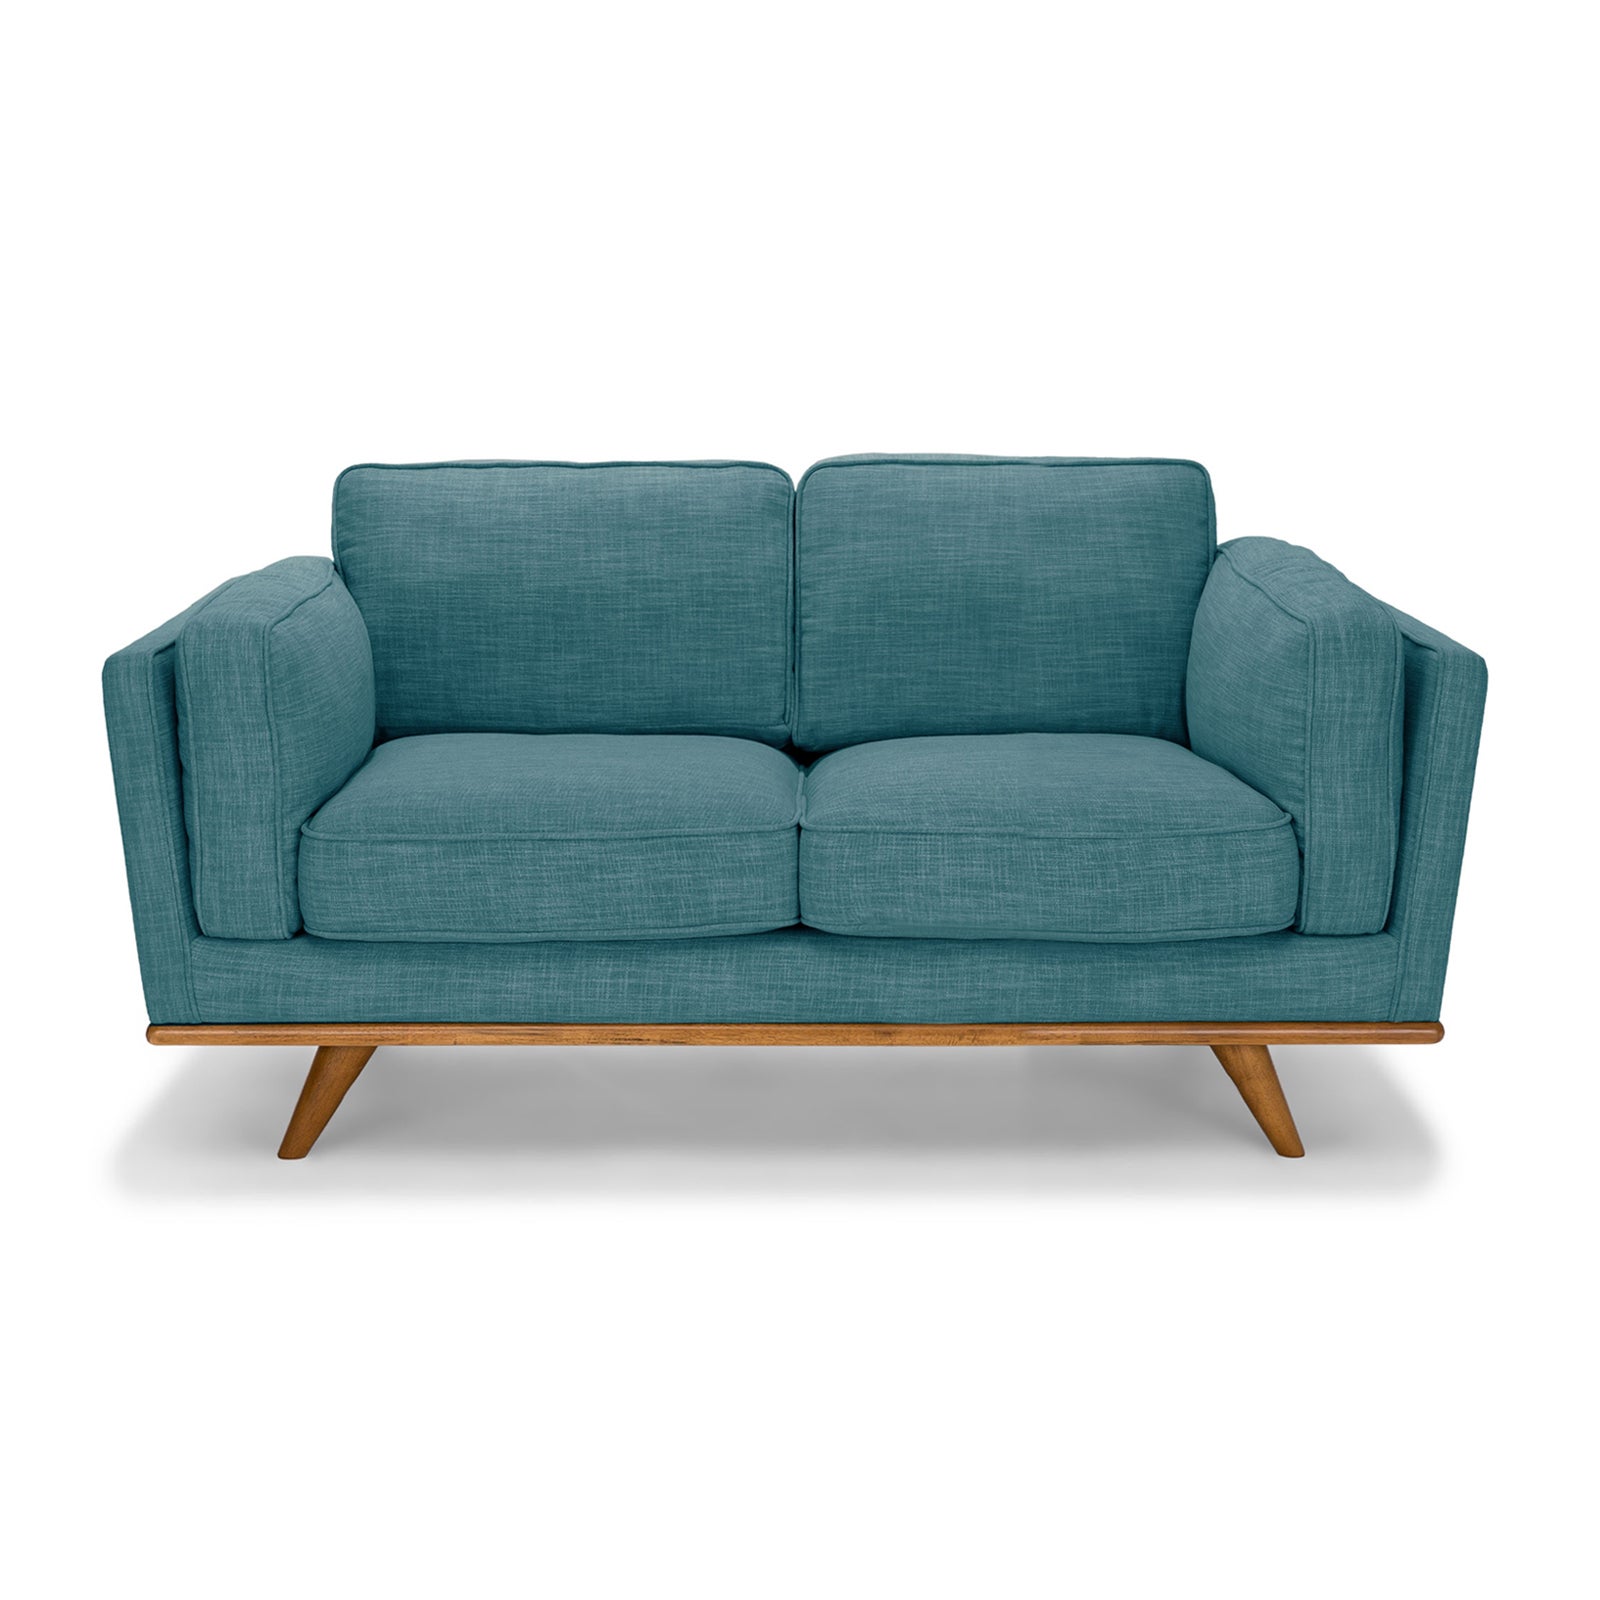 York 2 Seater Fabric Armchair Sofa Modern Lounge in Teal Colour